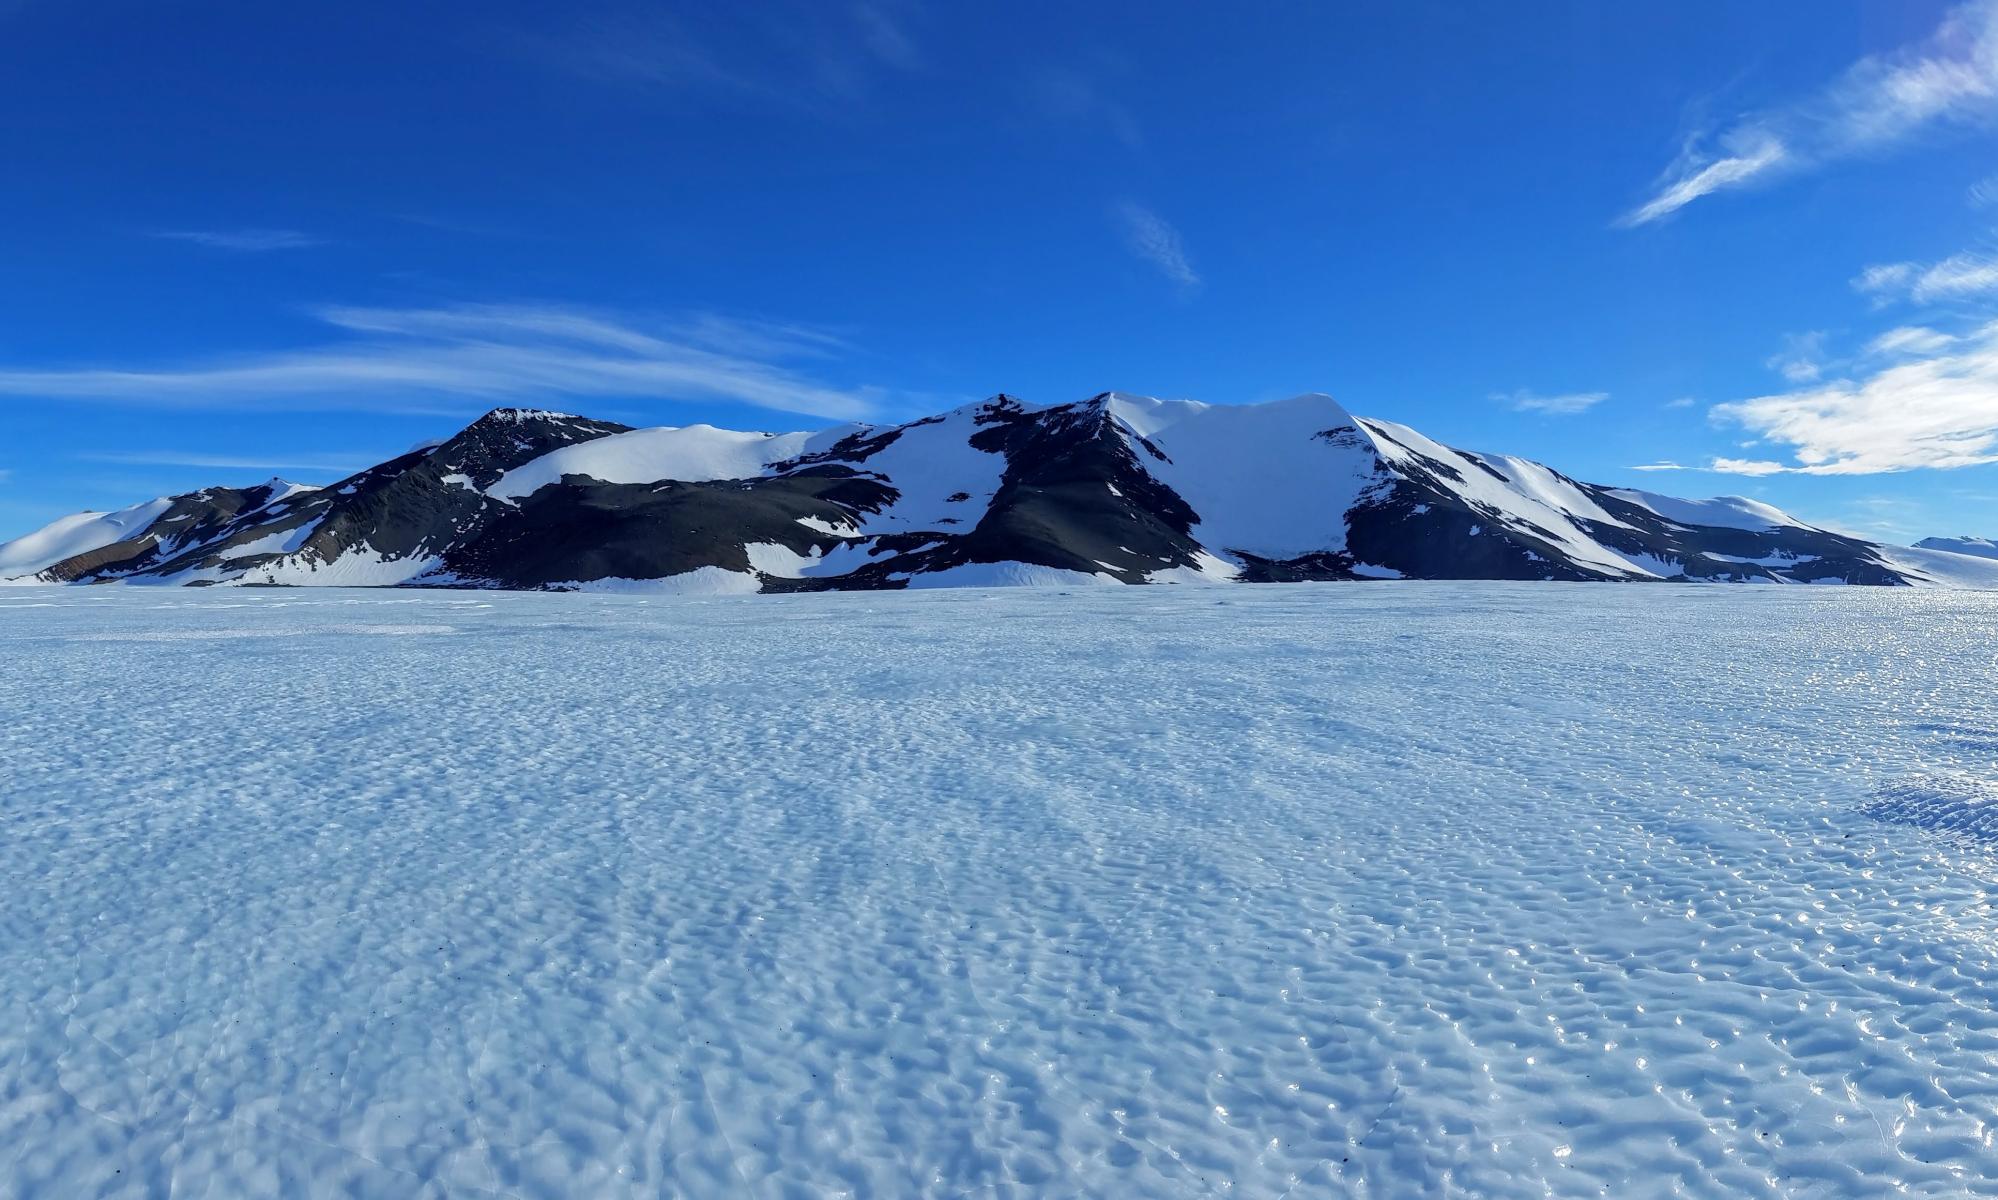 Mass melting of Antarctic ice sheet led to three metre sea level rise 120,000 years ago